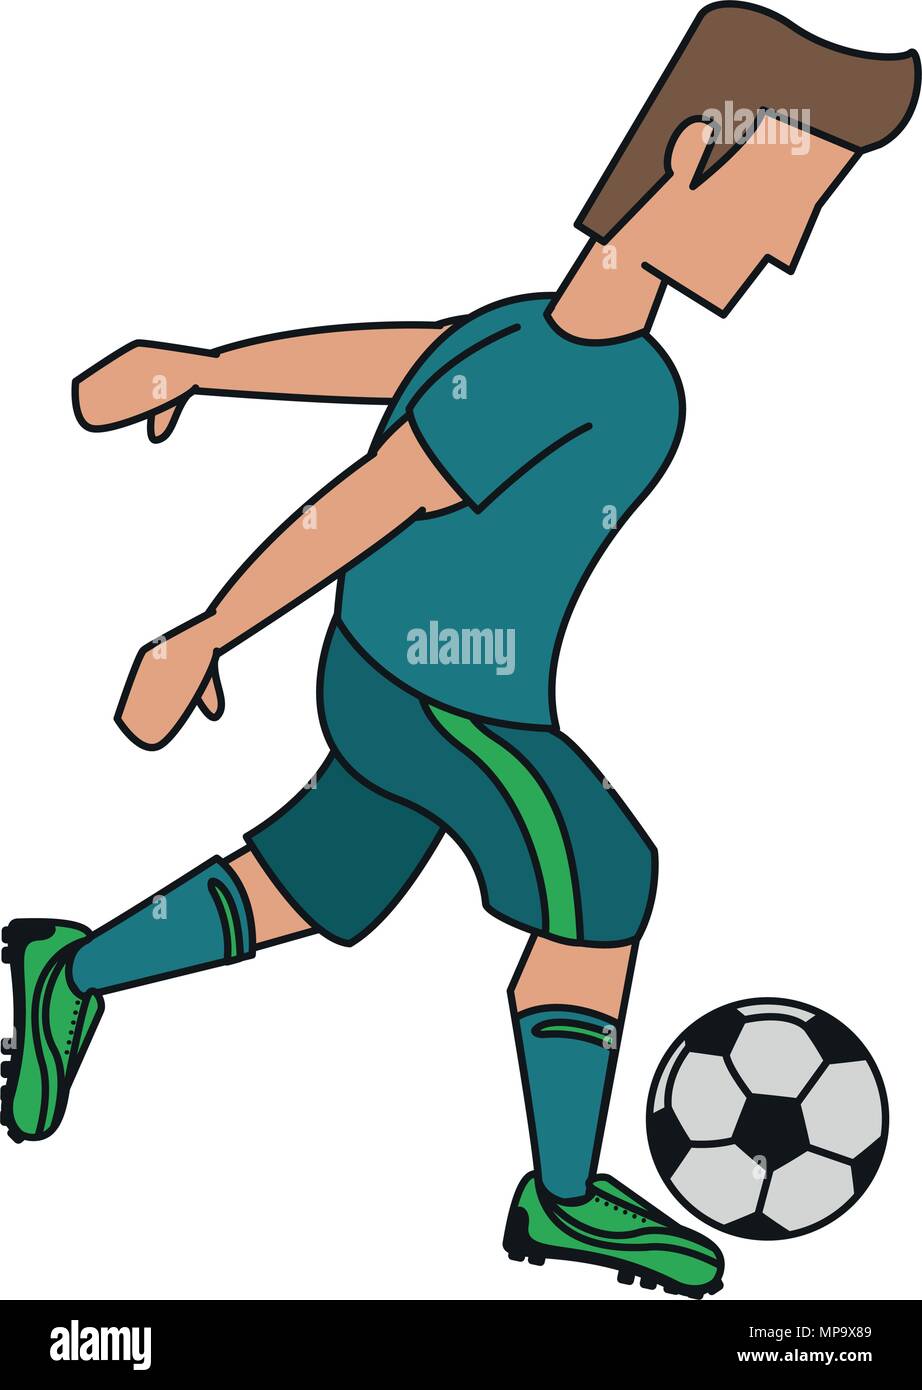 Football Player Cartoon Stock Photos & Football Player Cartoon Stock